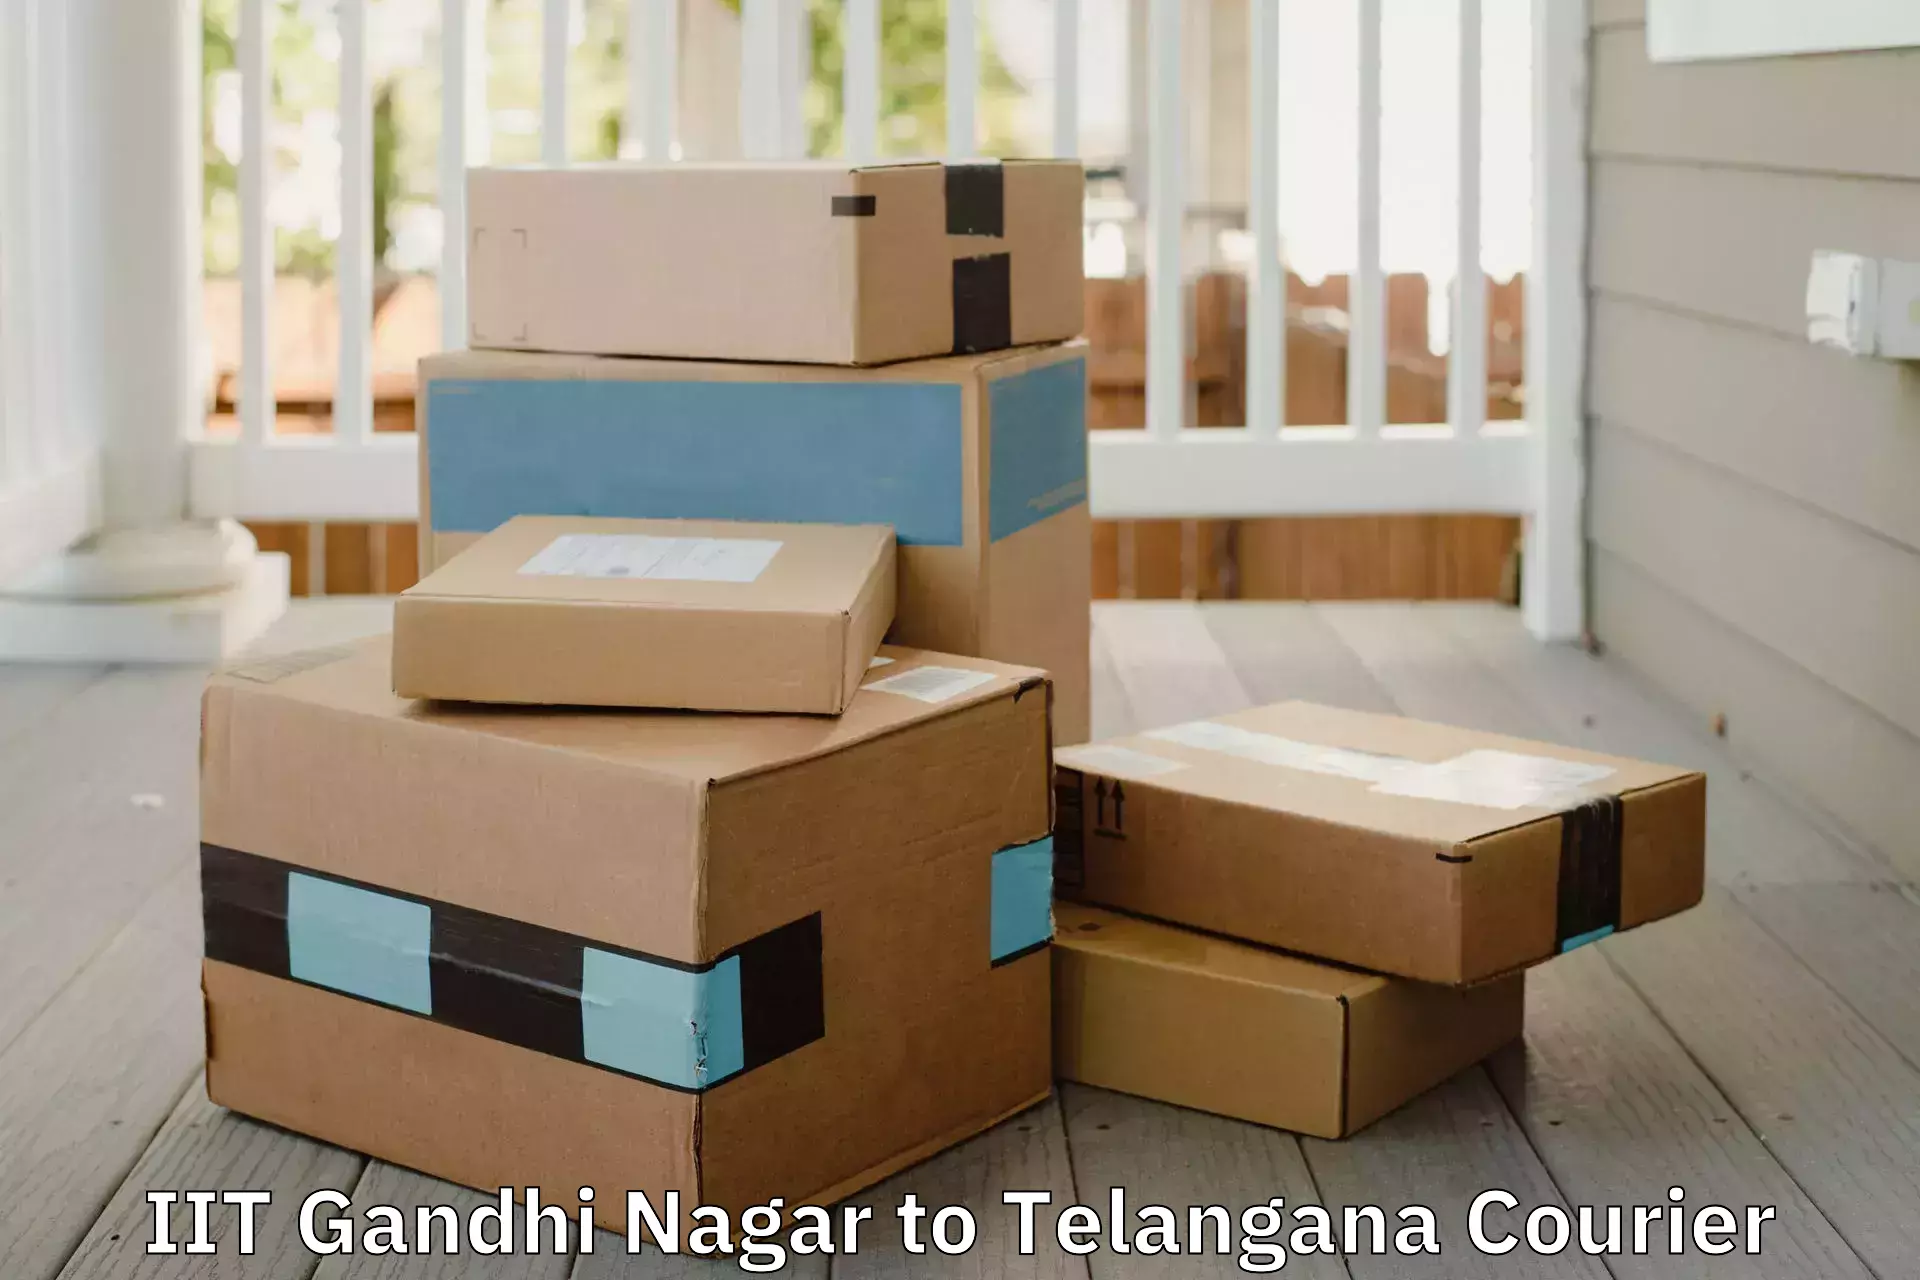 Full-service movers IIT Gandhi Nagar to Wanaparthy